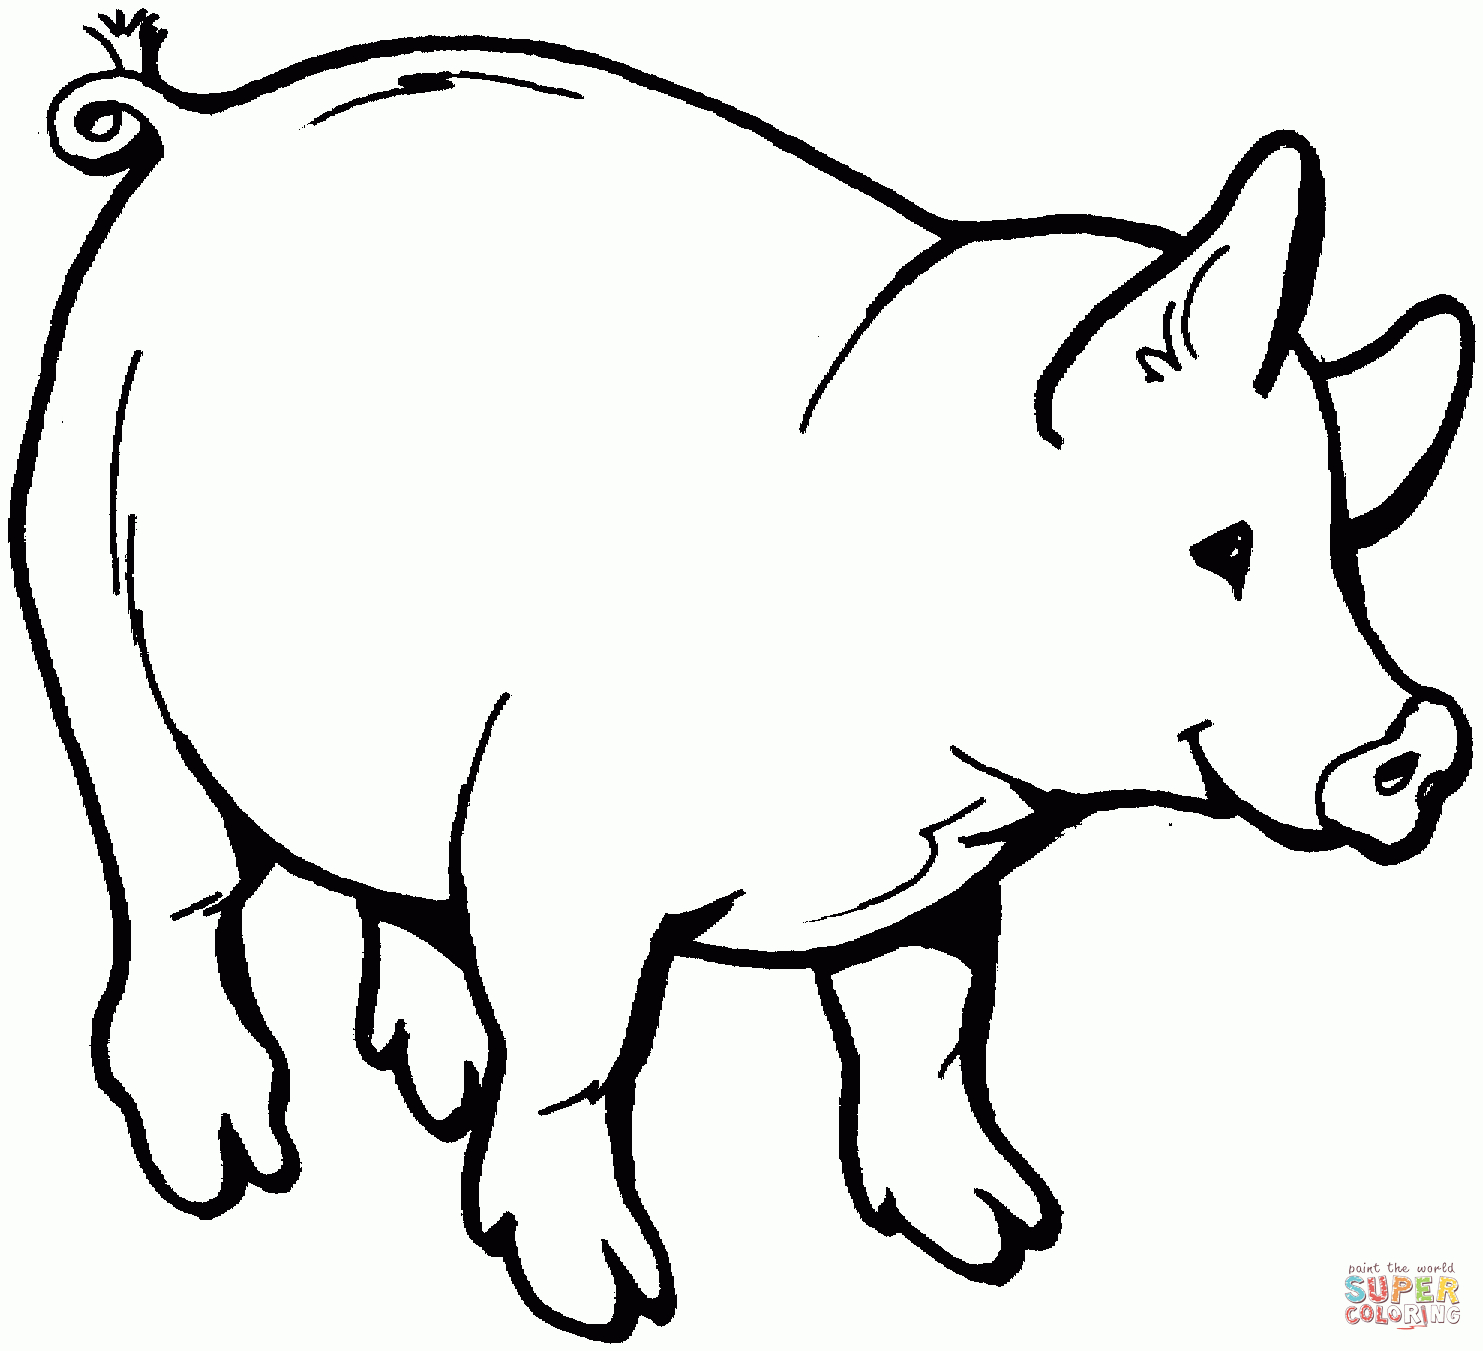 Smiling Pig Coloring Page | Free Printable Coloring Pages - Pig Coloring Sheets Free Printable